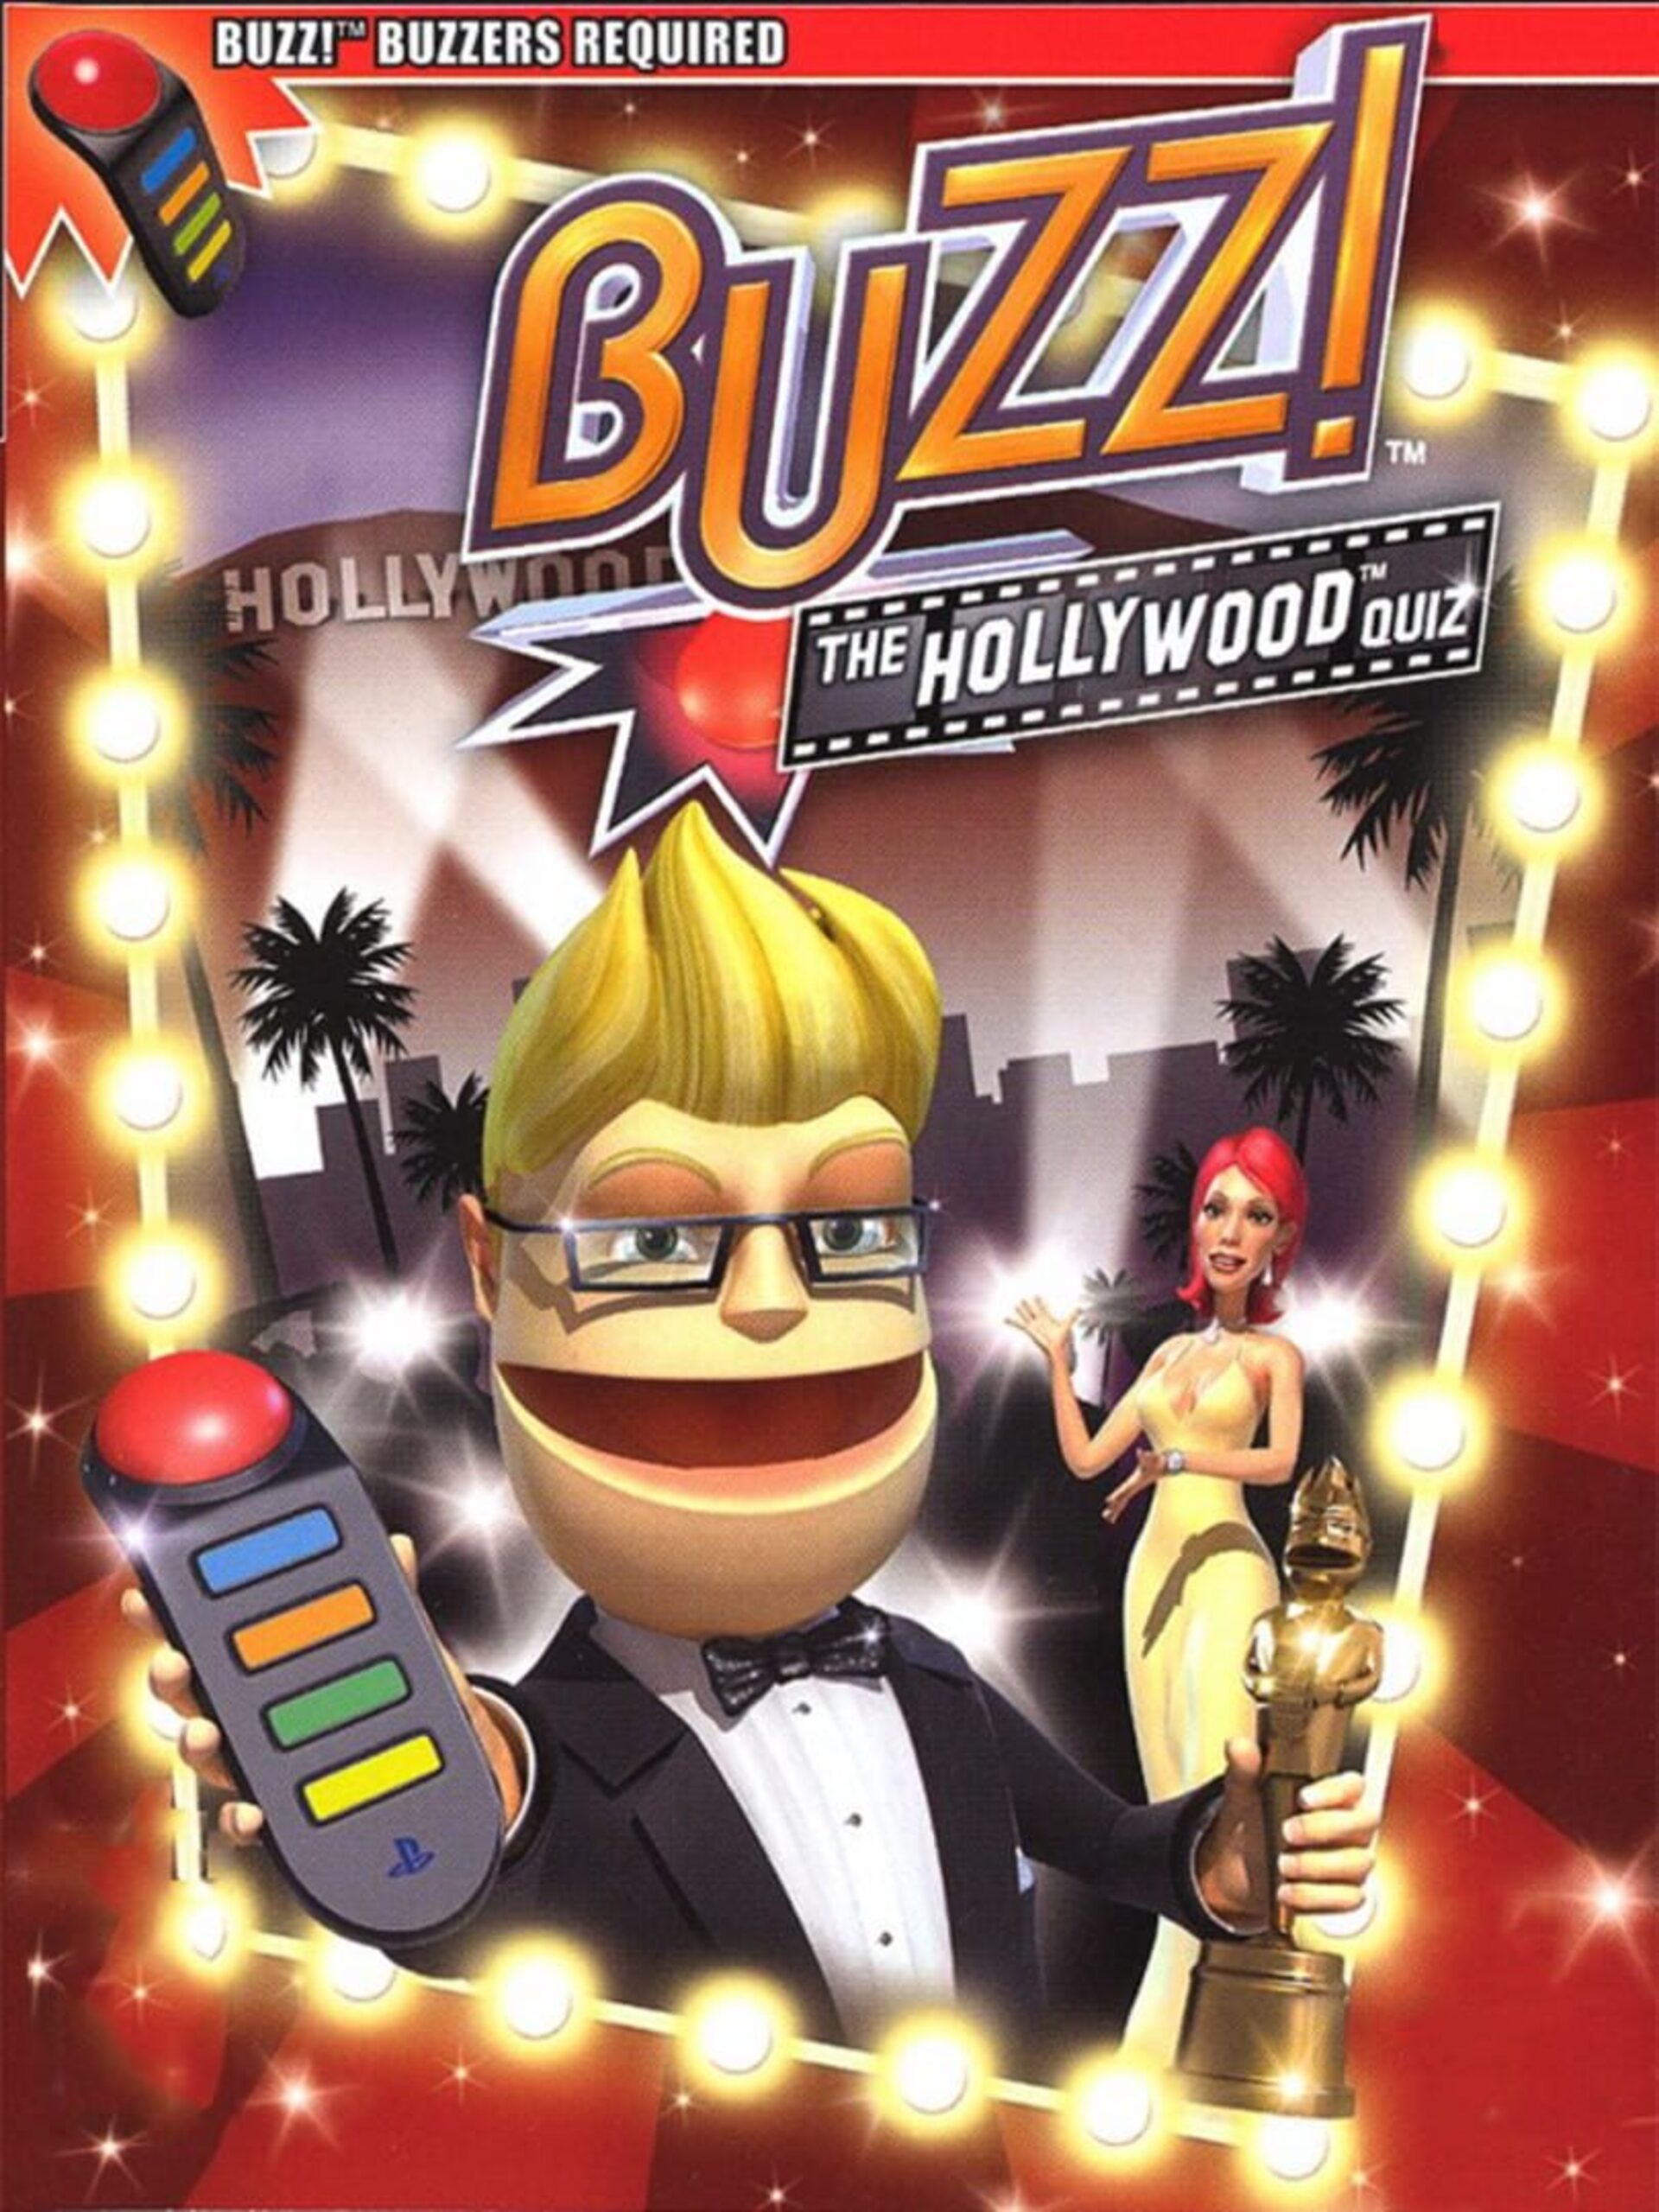 Juego Playstation 2 Buzz! Hollywood (segunda mano)